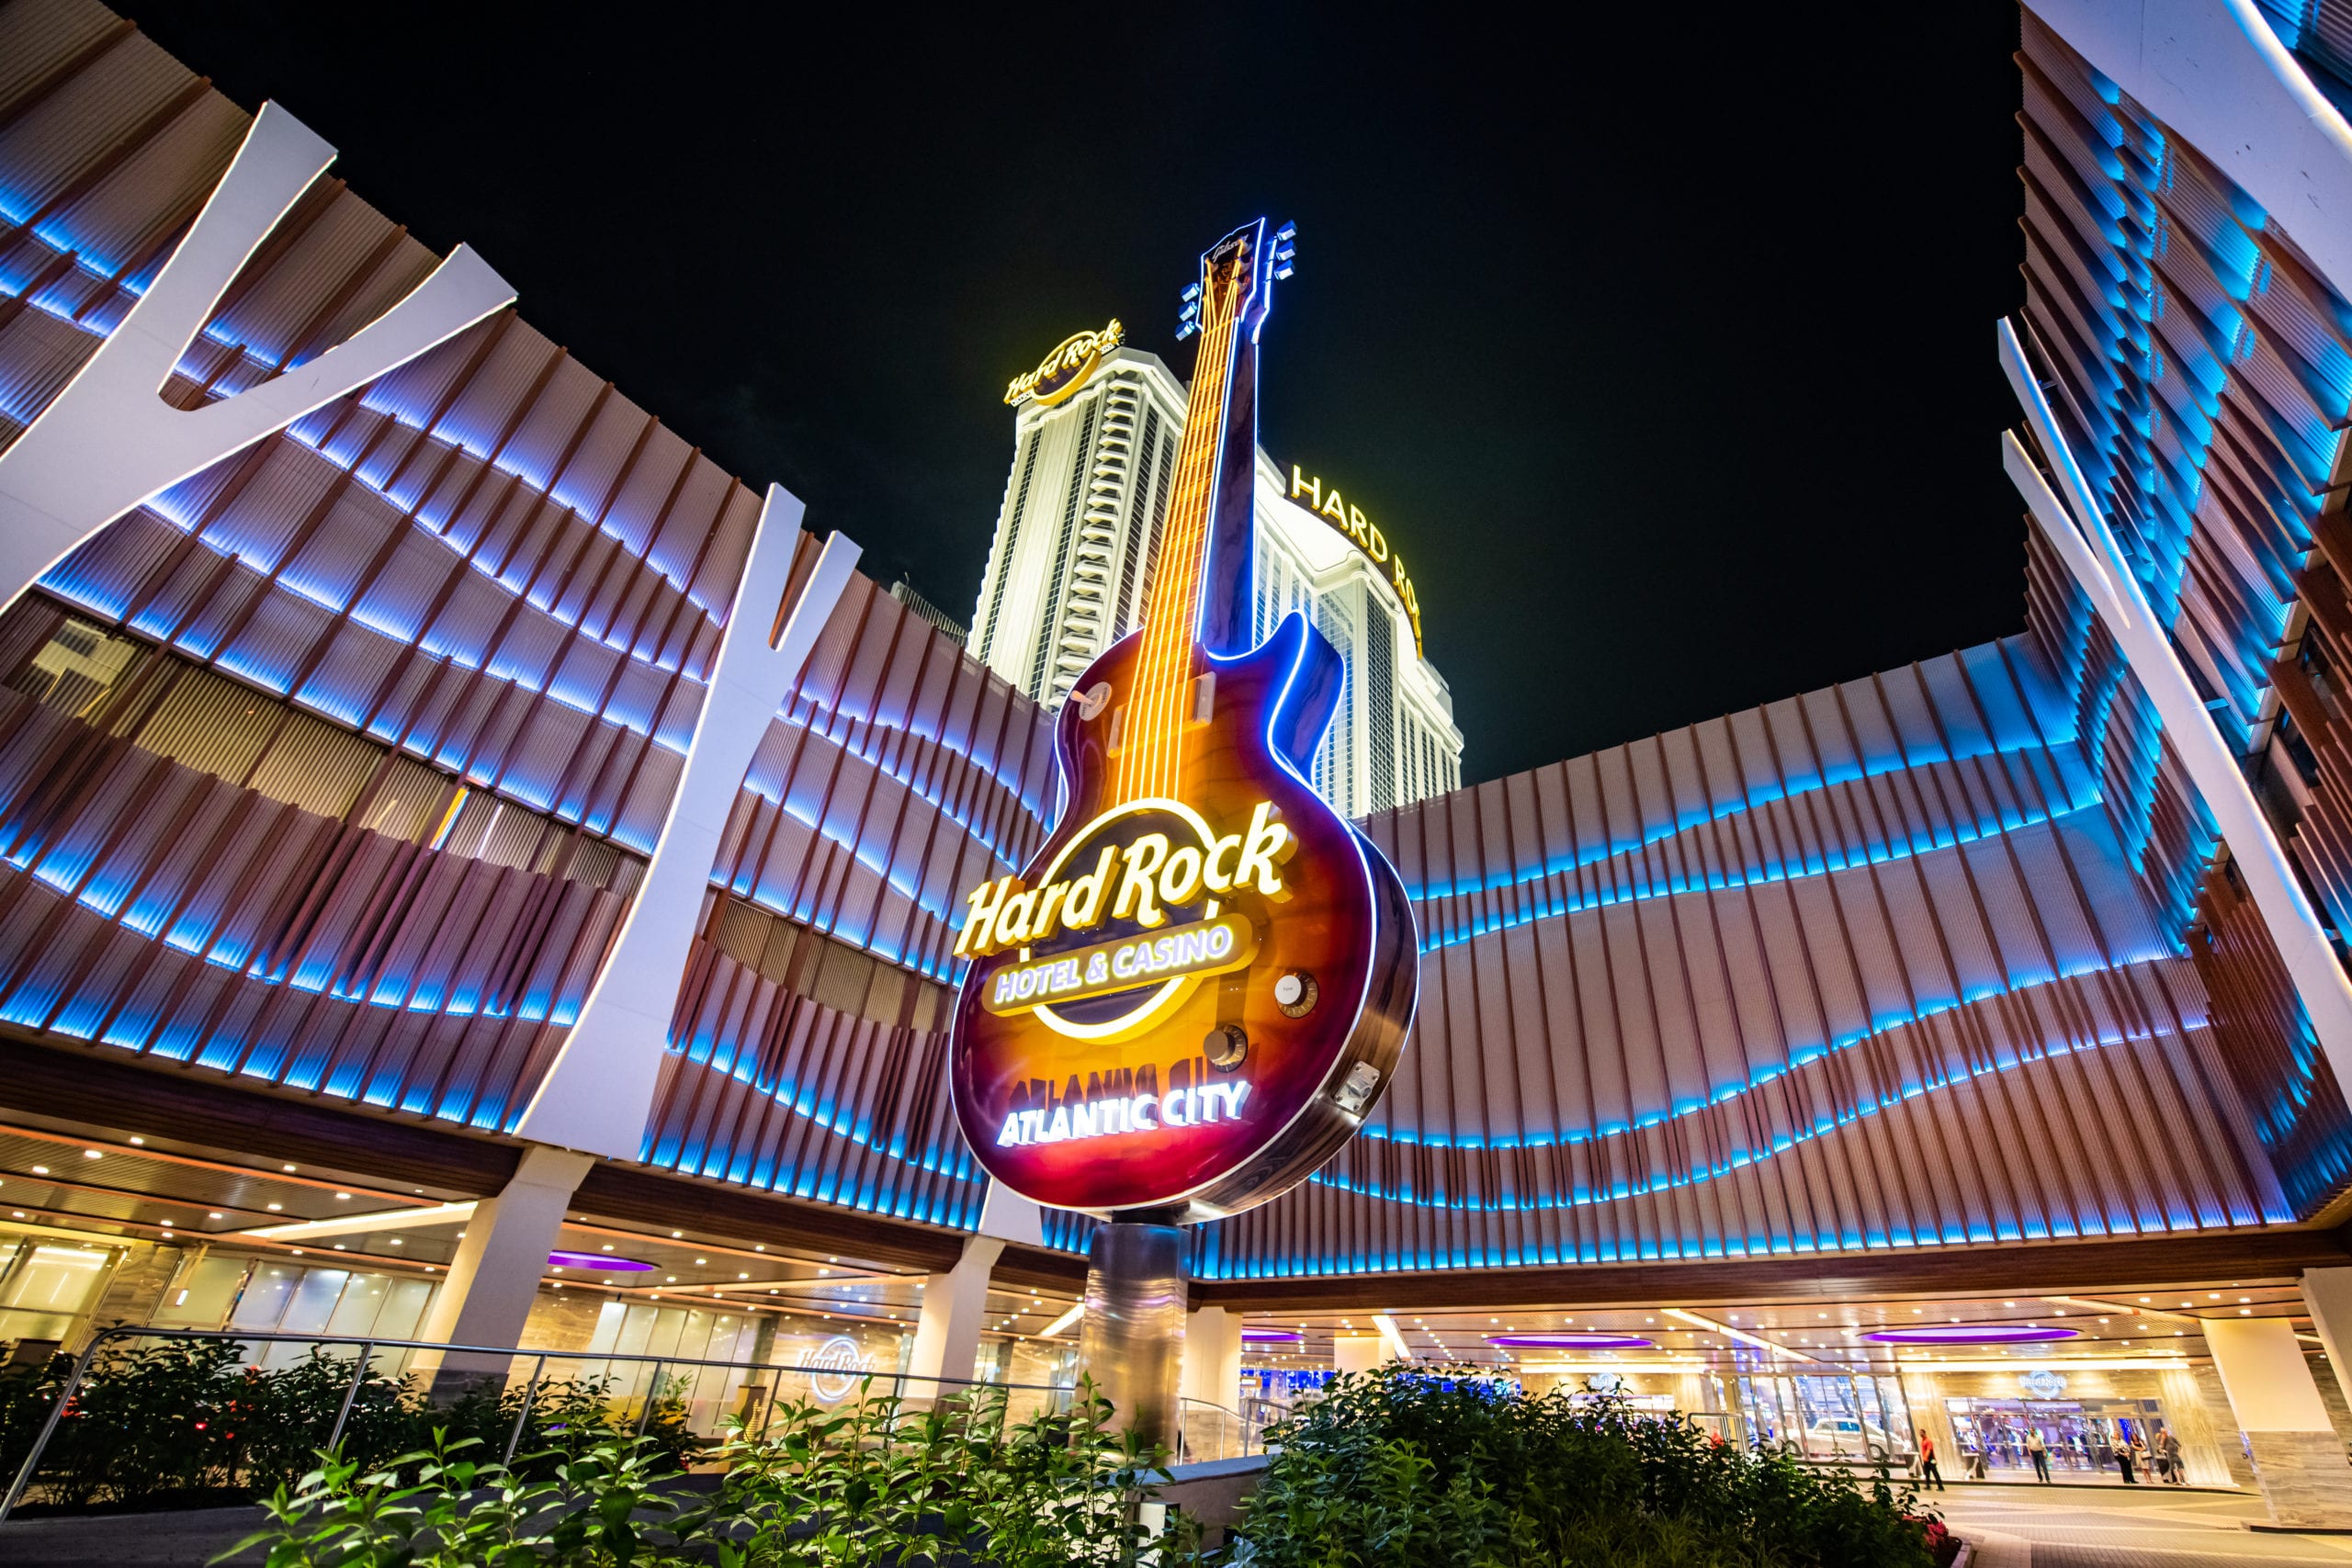 EDSA Hard Rock Hotel & Casino Atlantic City Closeup of guitar in courtyard at night